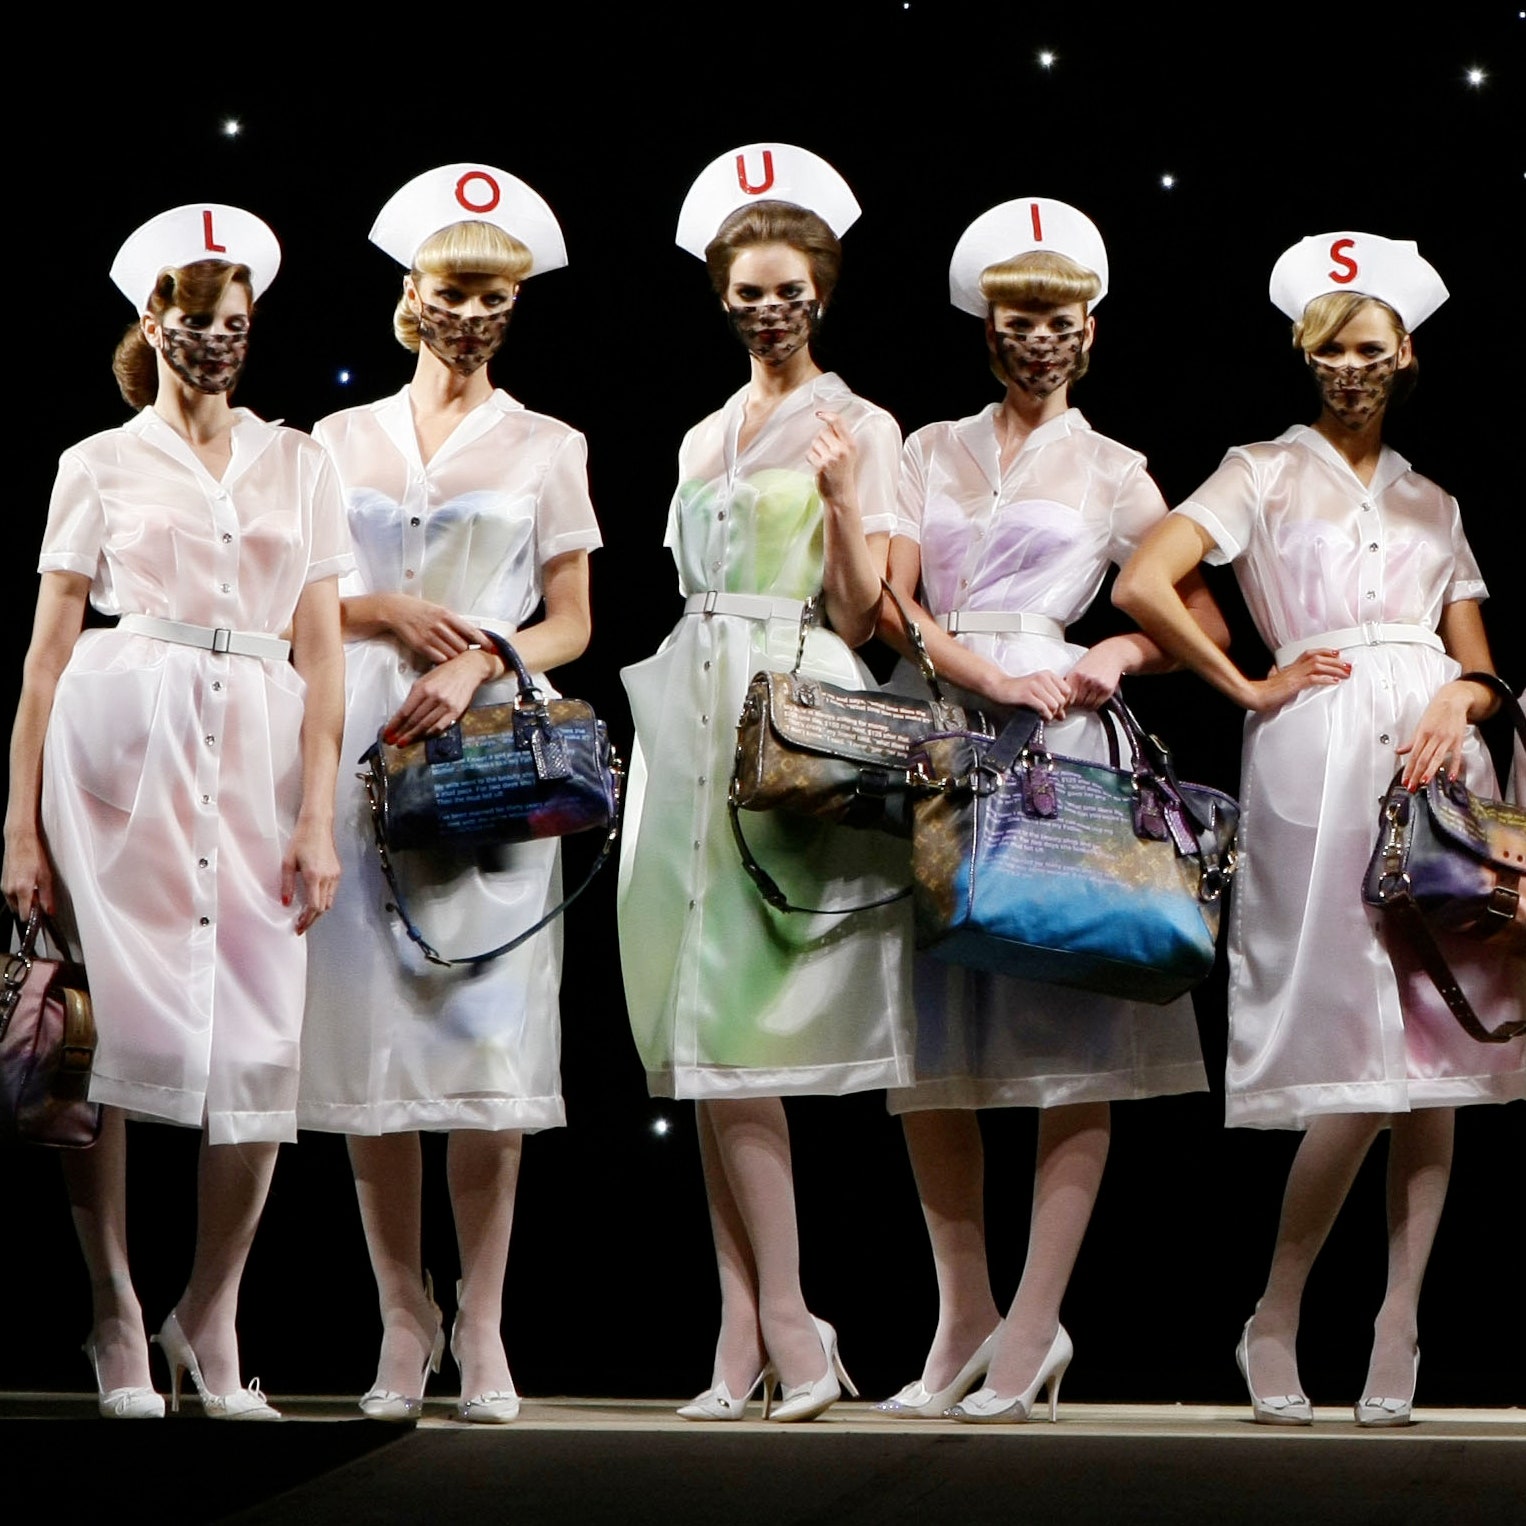 Human Person Clothing Apparel Helmet Fashion shows iconic Louis Vuitton best